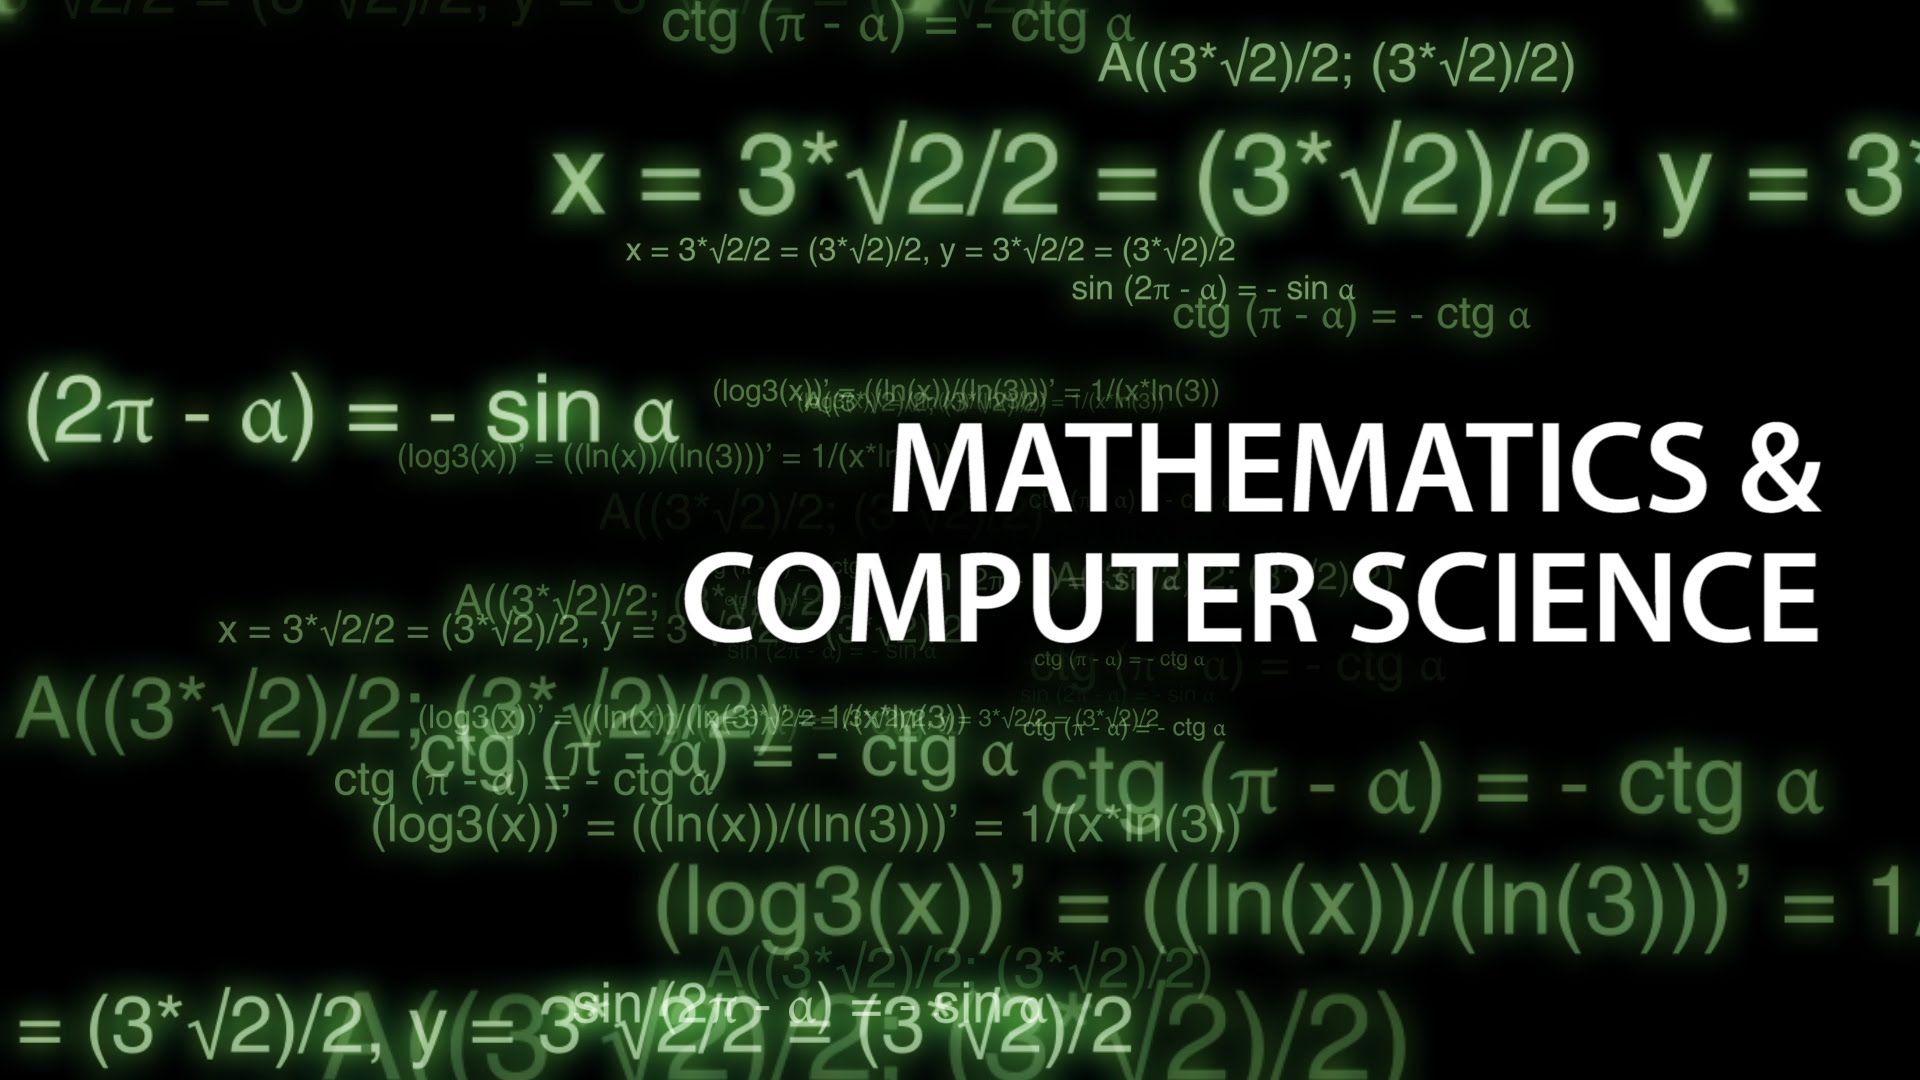 Mathematics and Computer Science at Bridgewater College